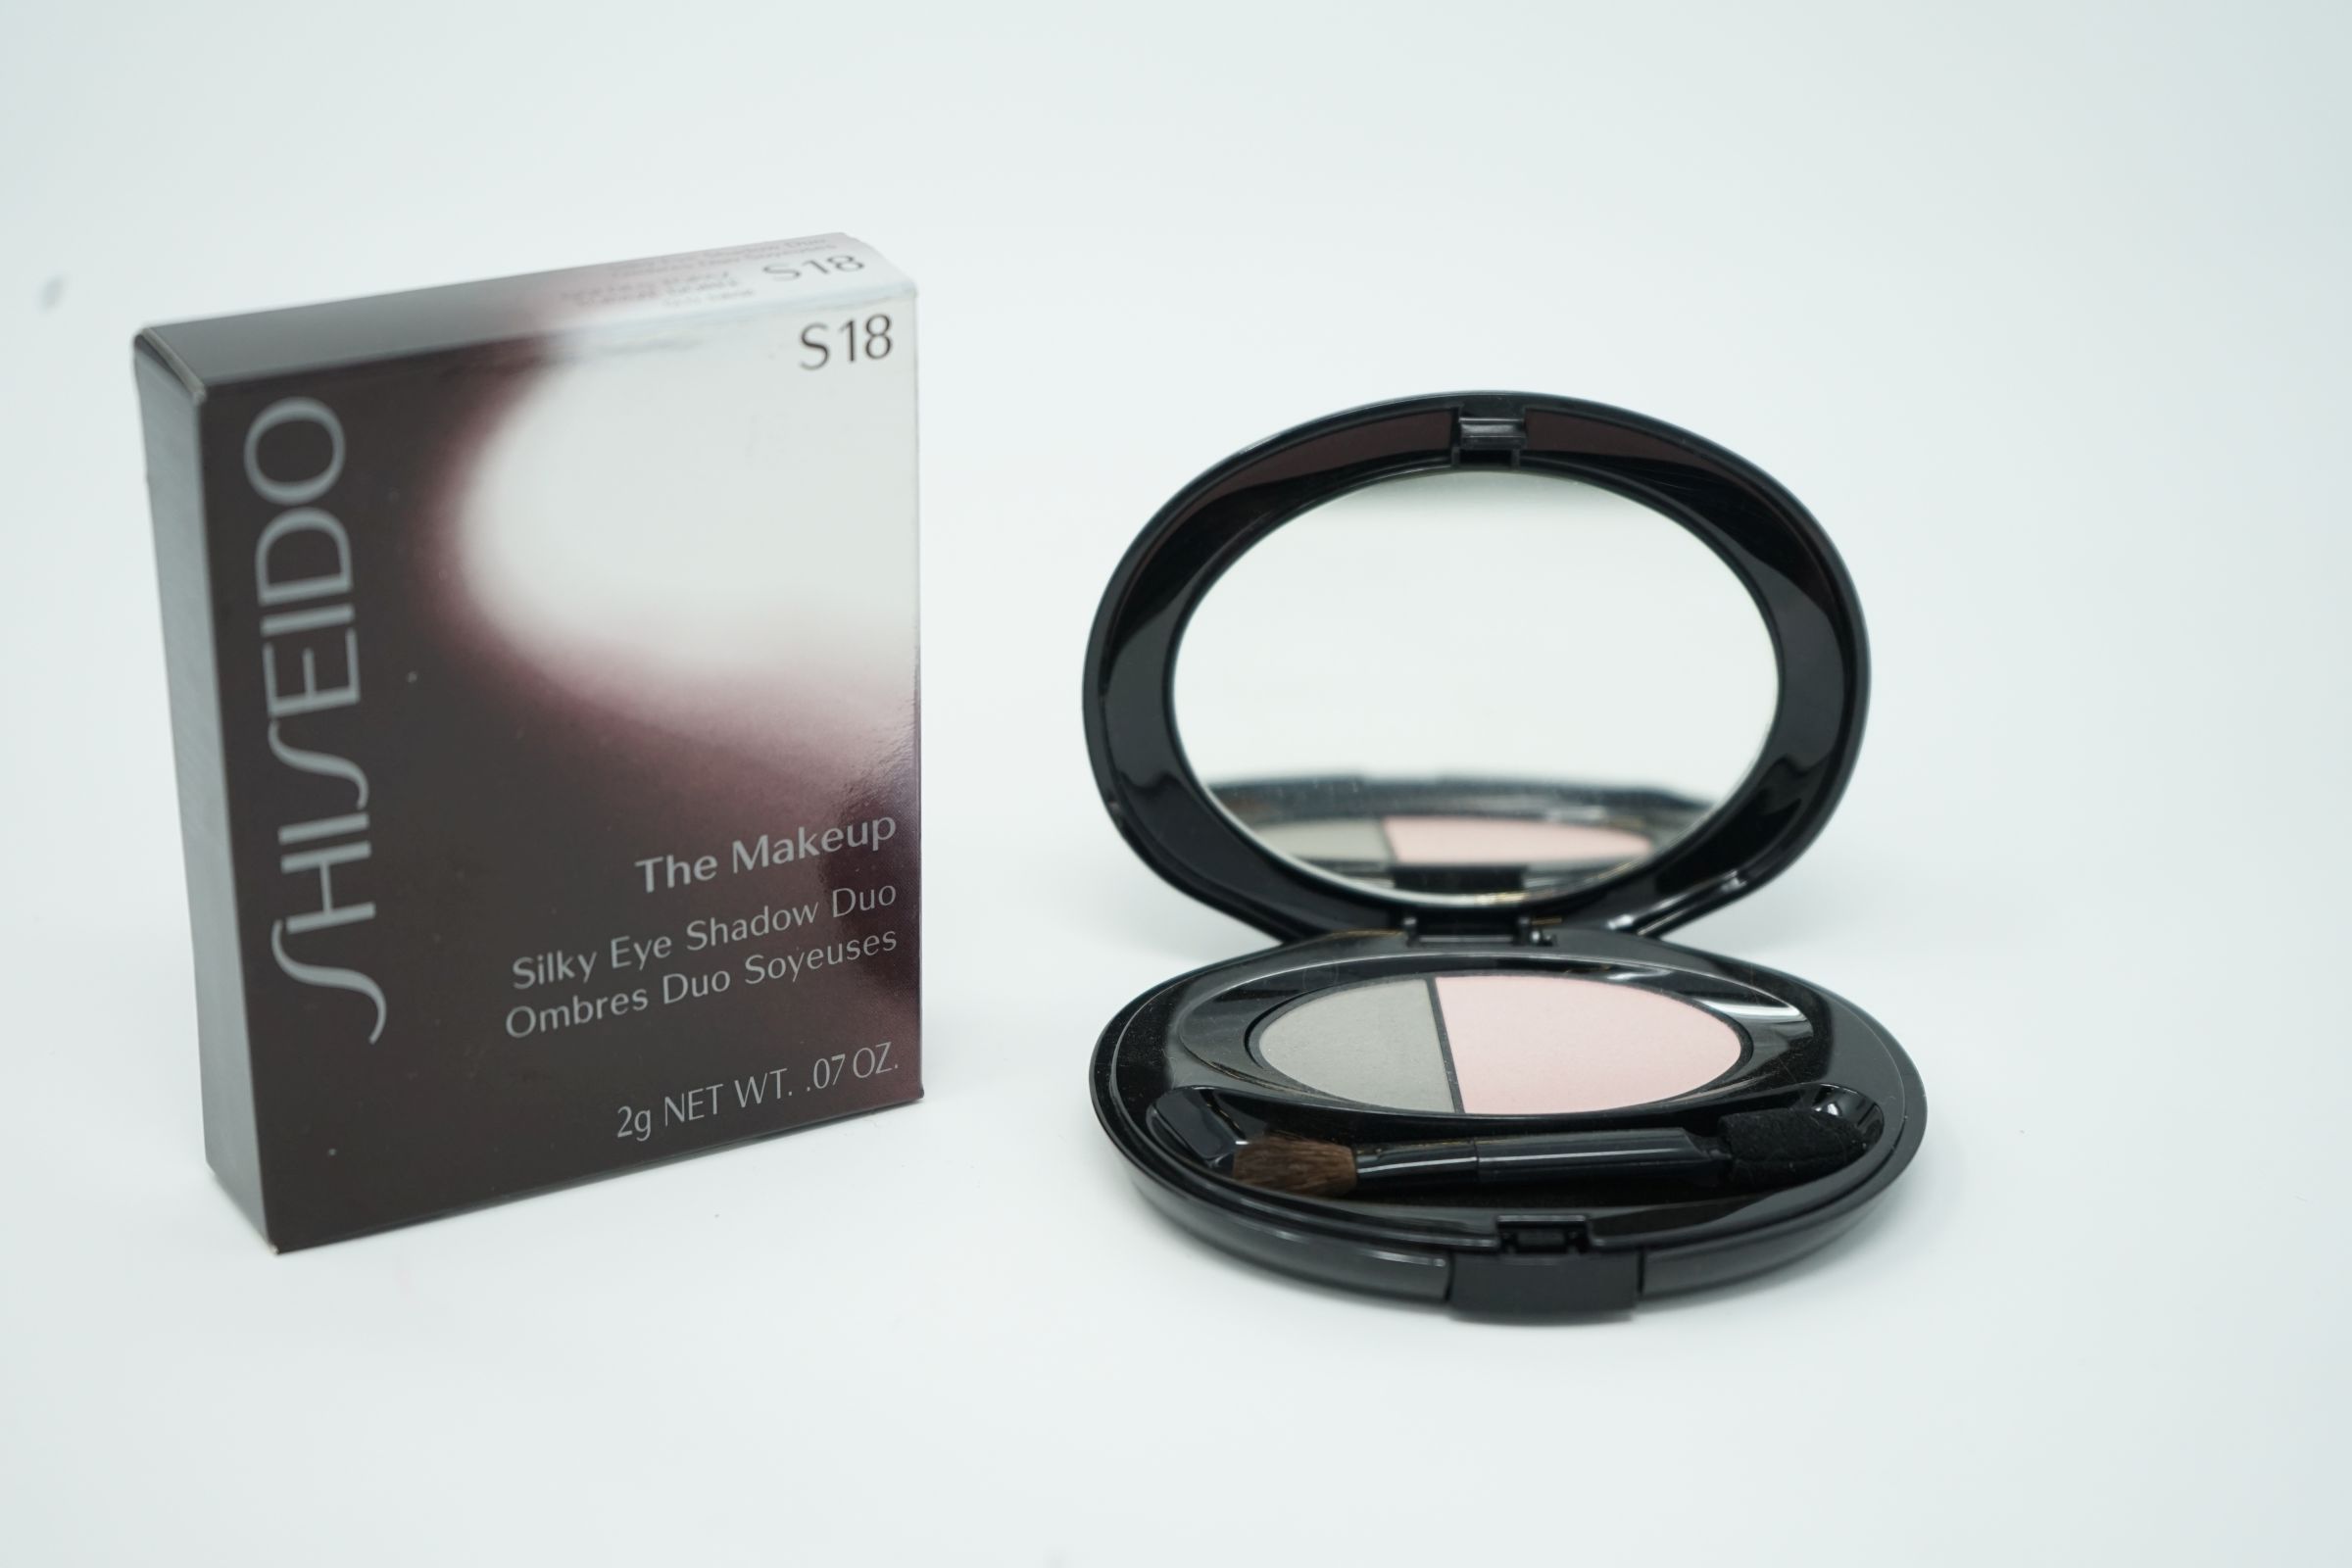 Shiseido The Makeup Silky Eye Shadow Duo S18 Golden Topaz